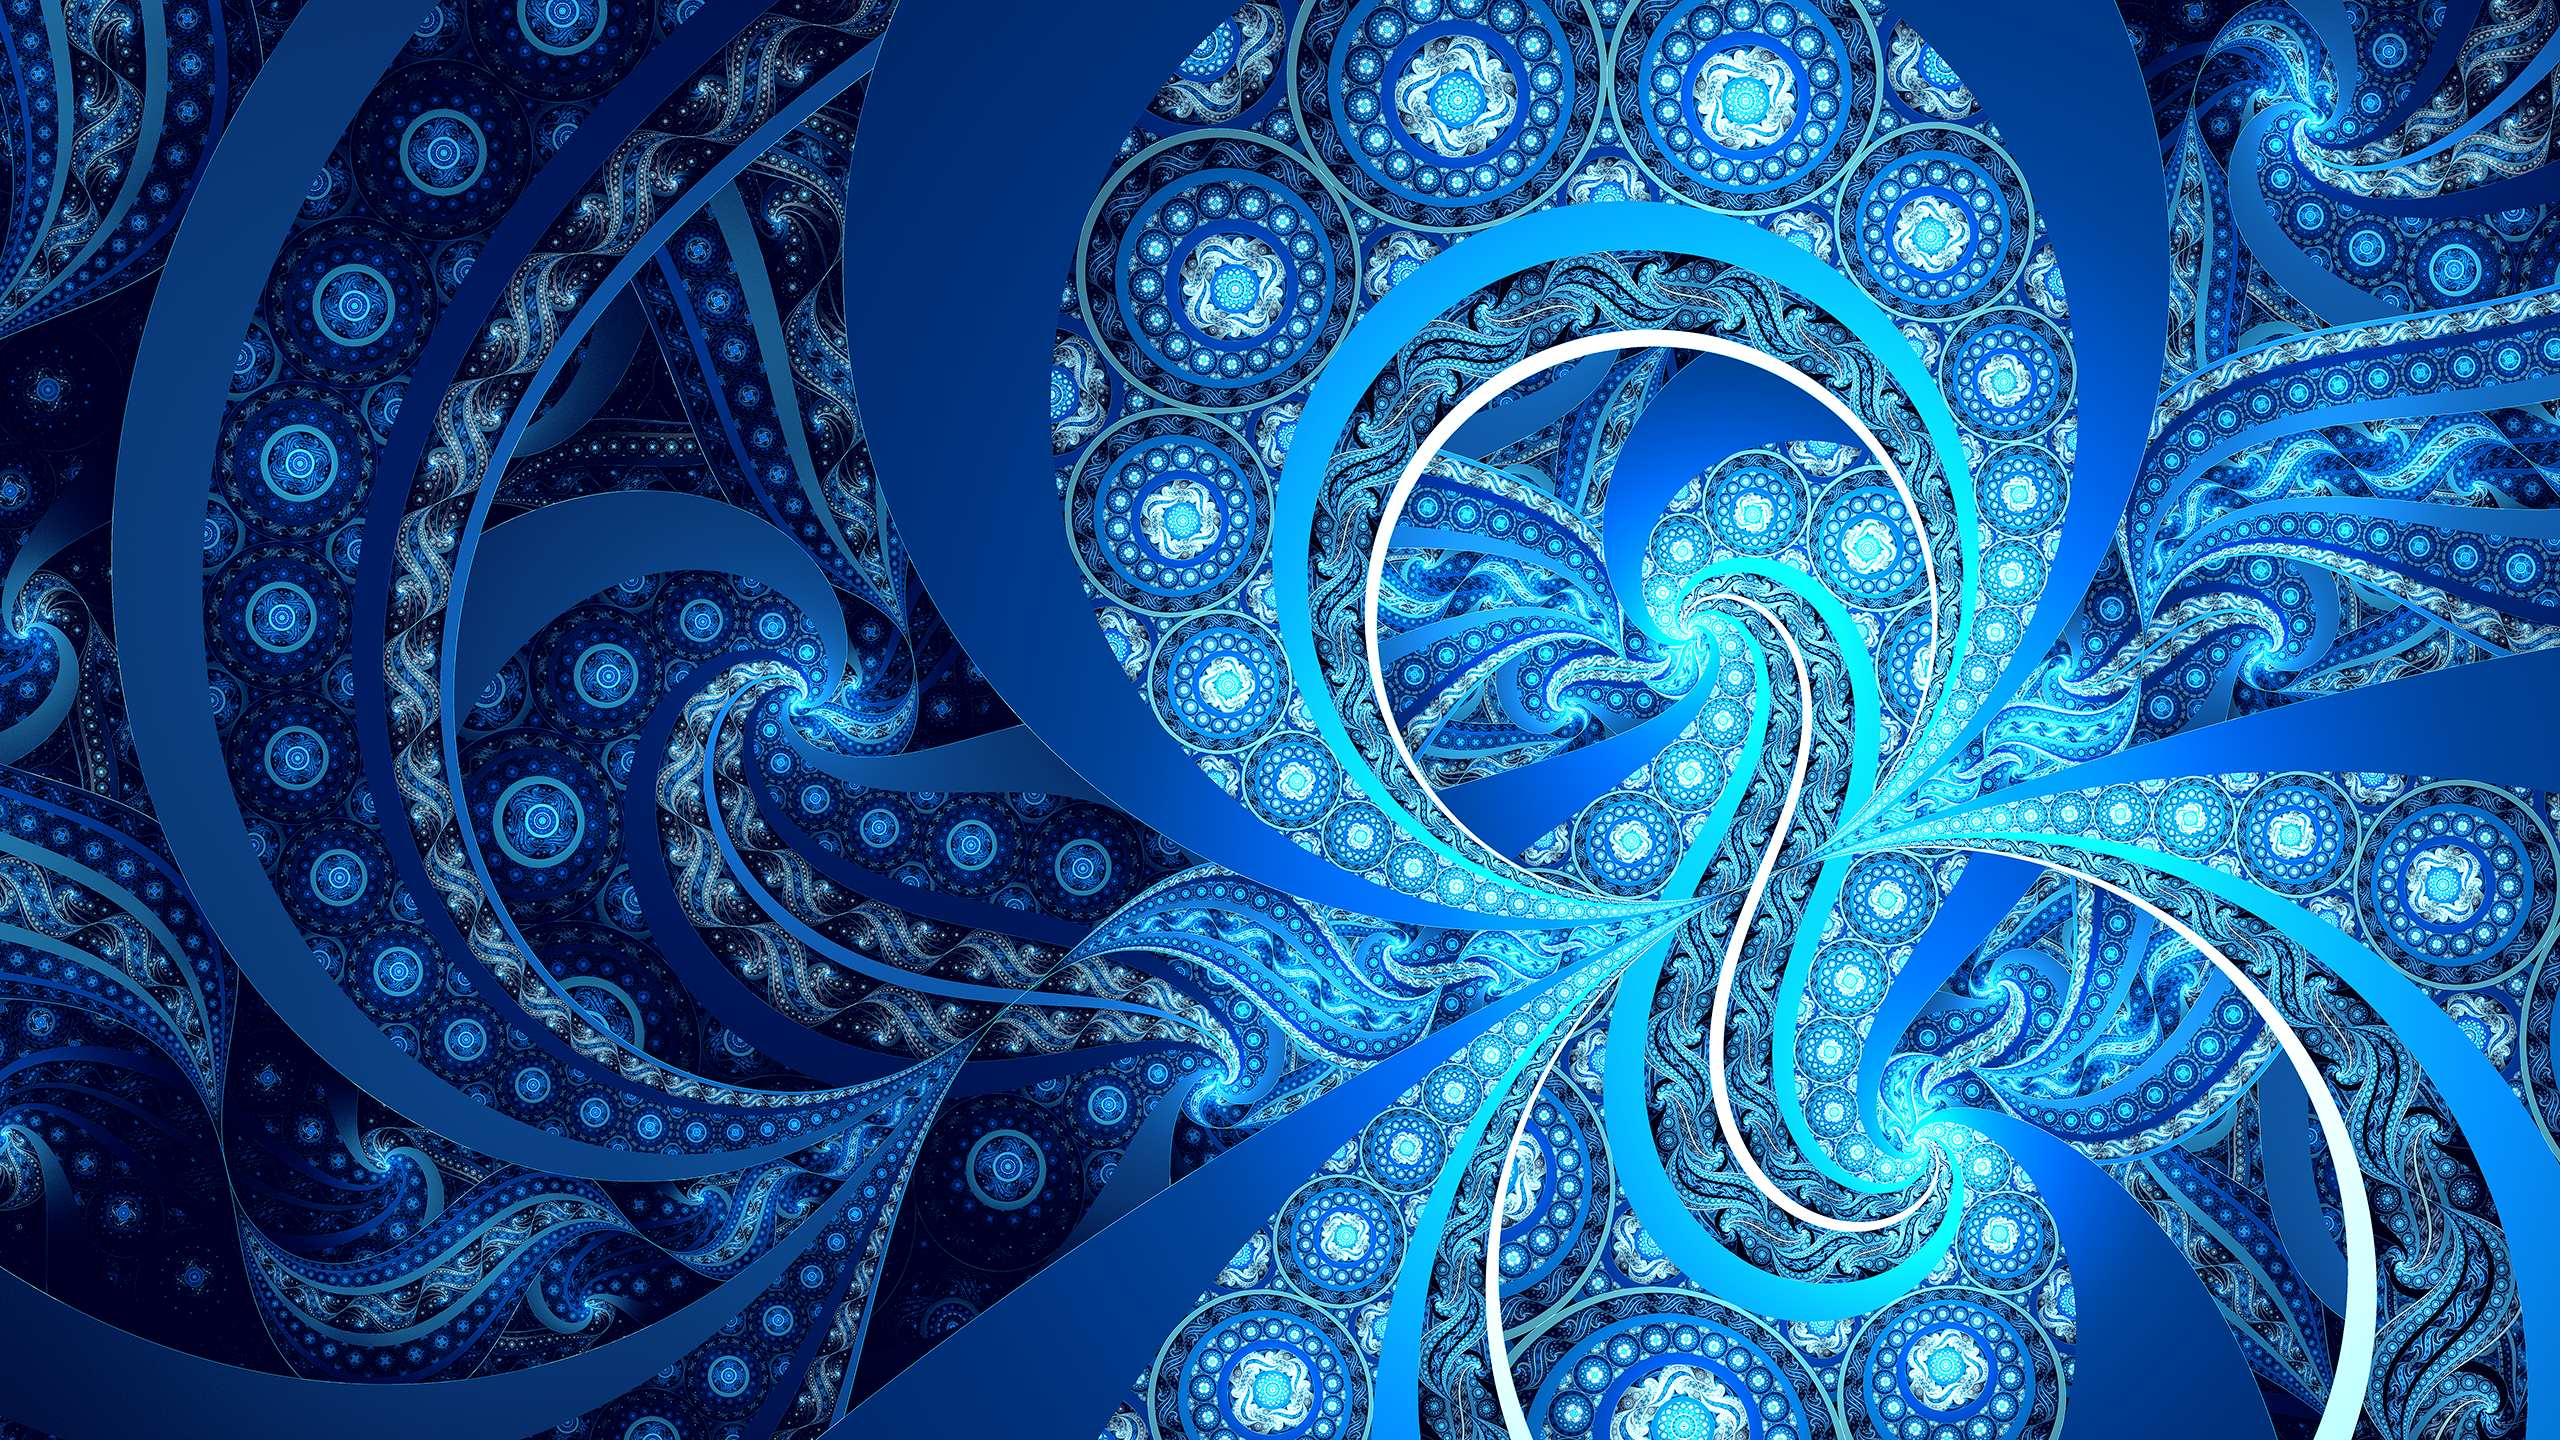 Artistic Blue Digital Art Fractal 2560x1440